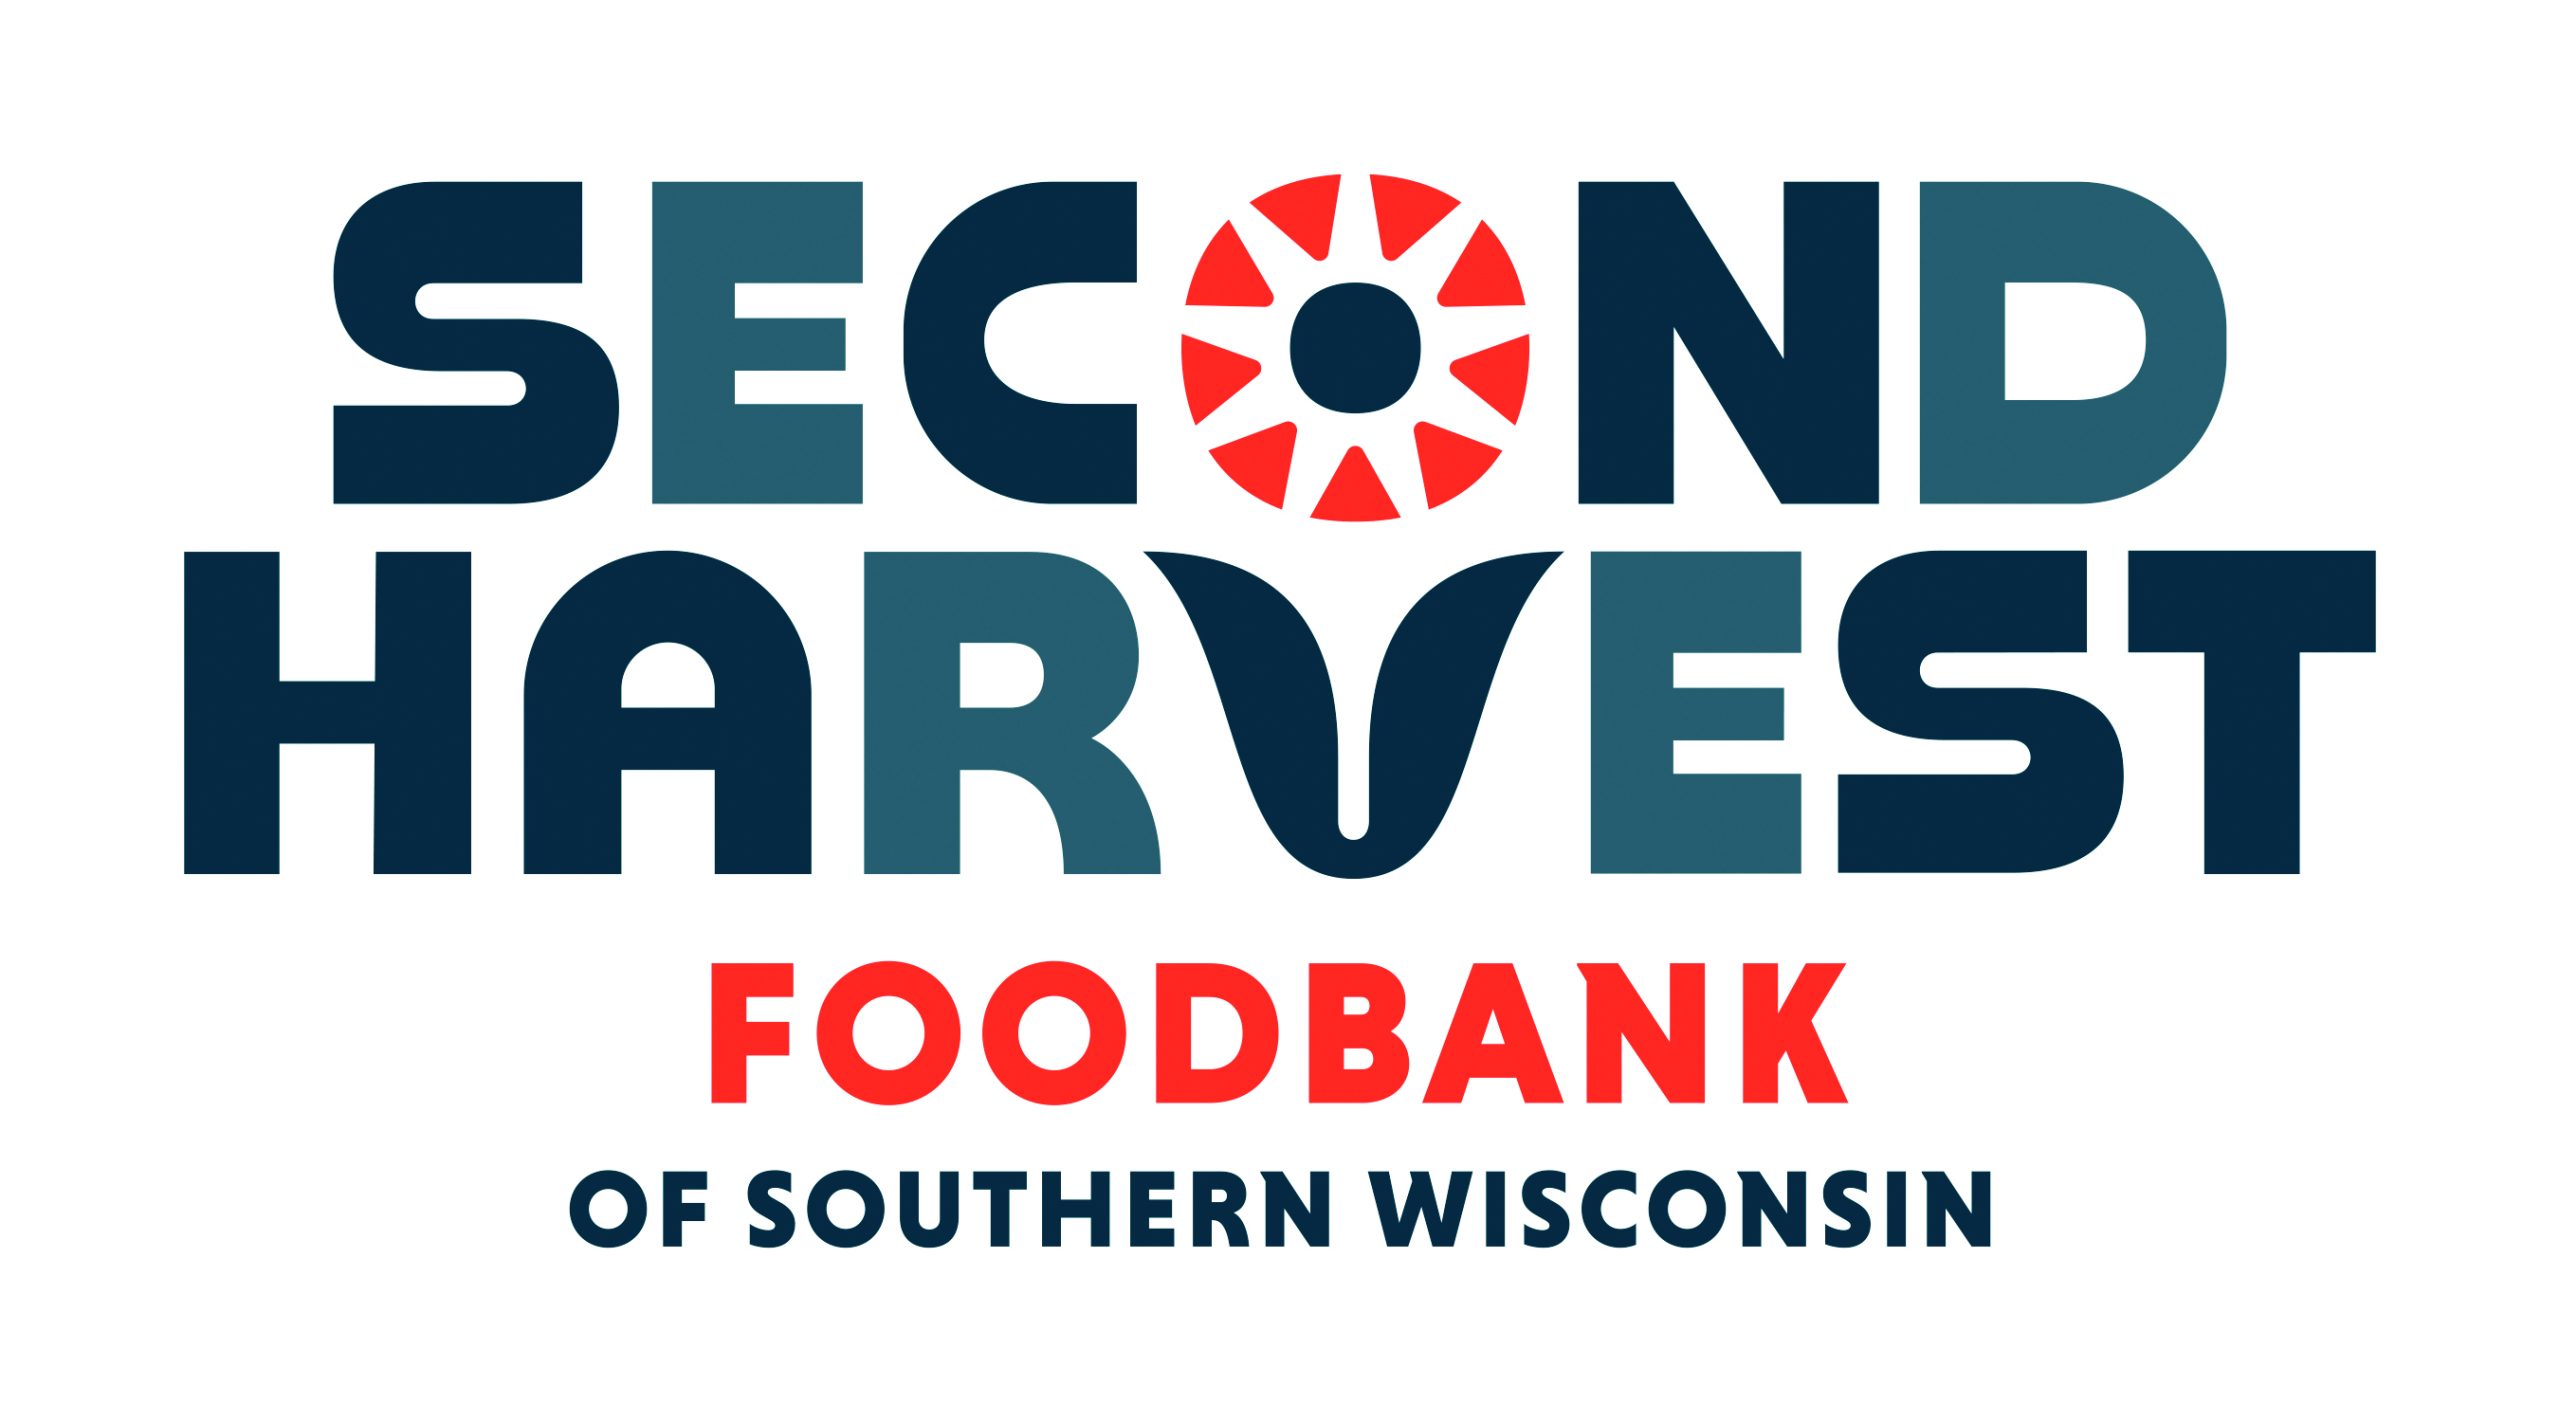 Second Harvest Foodbank Brand Resources Second Harvest Foodbank Of